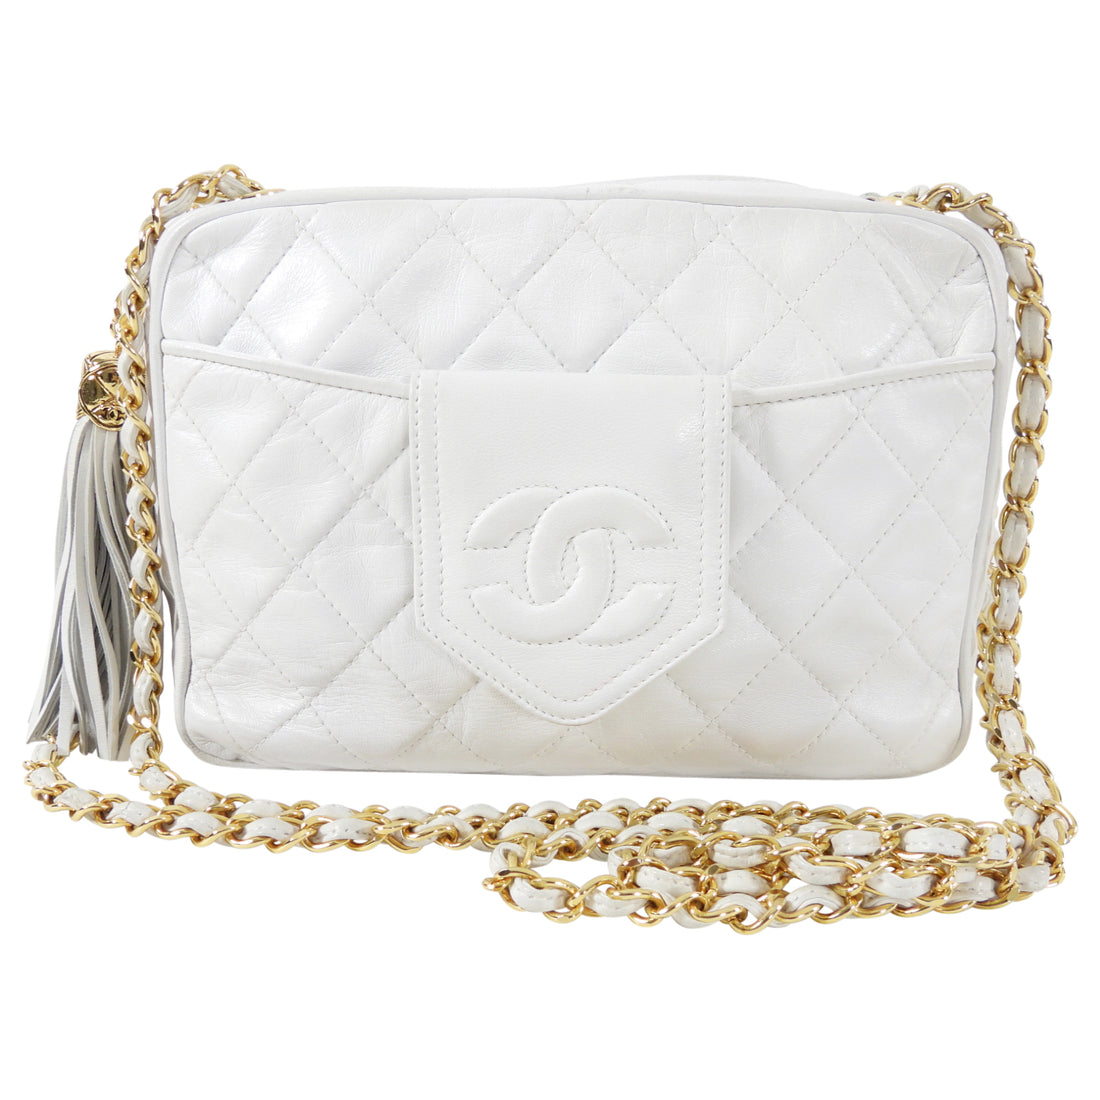 31 vintage leather handbag Chanel White in Leather - 31337202